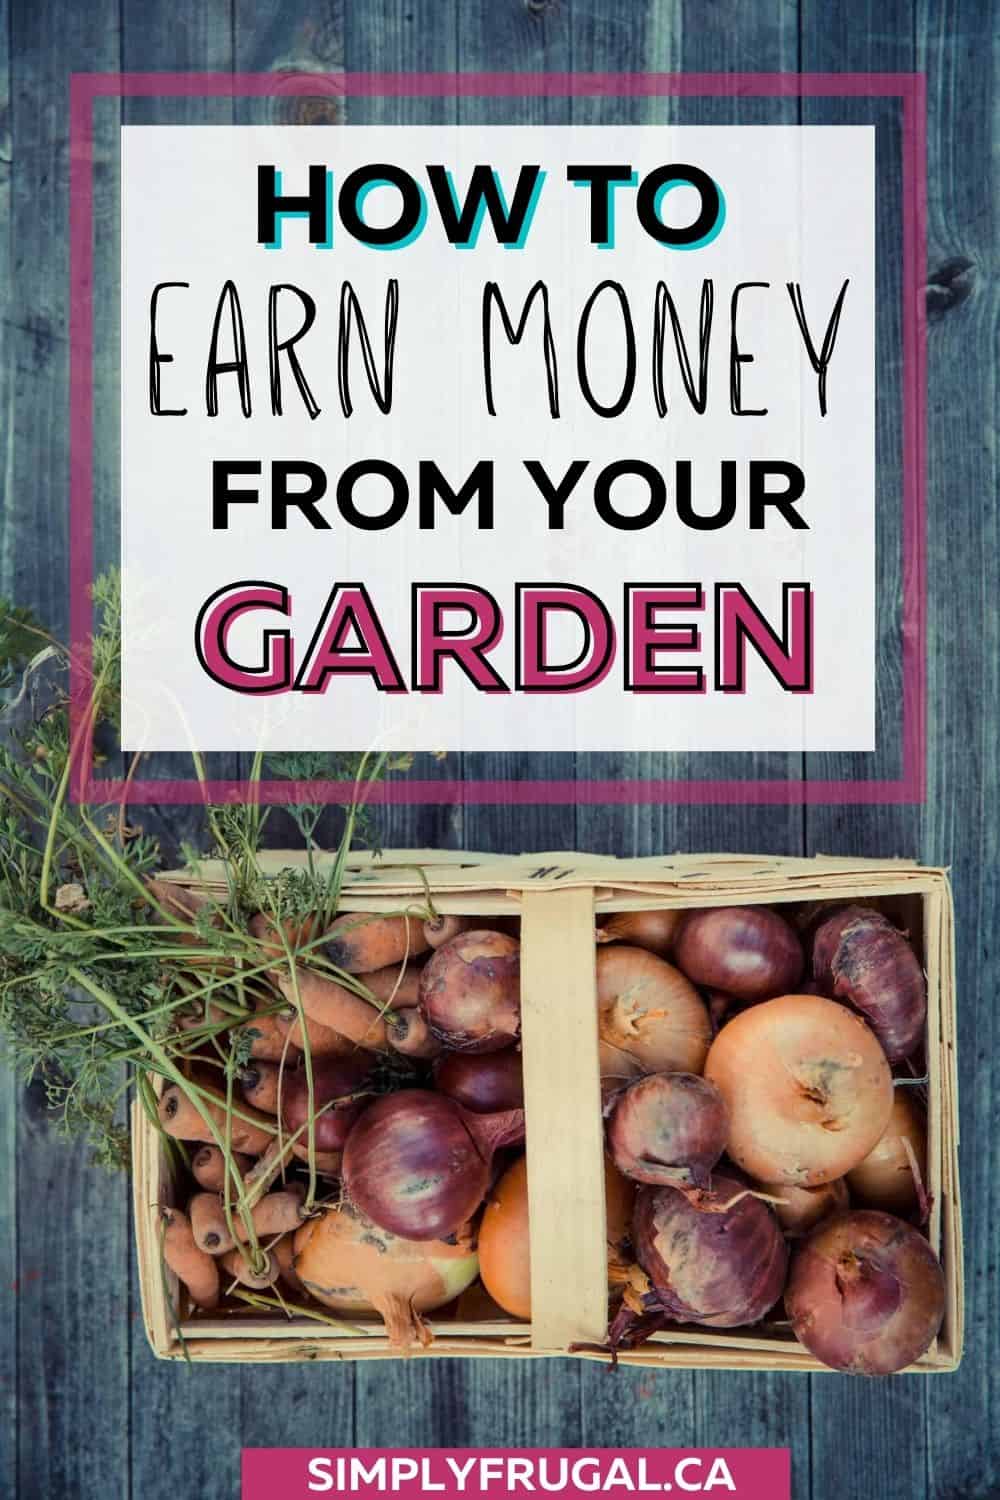 Earn money from your garden